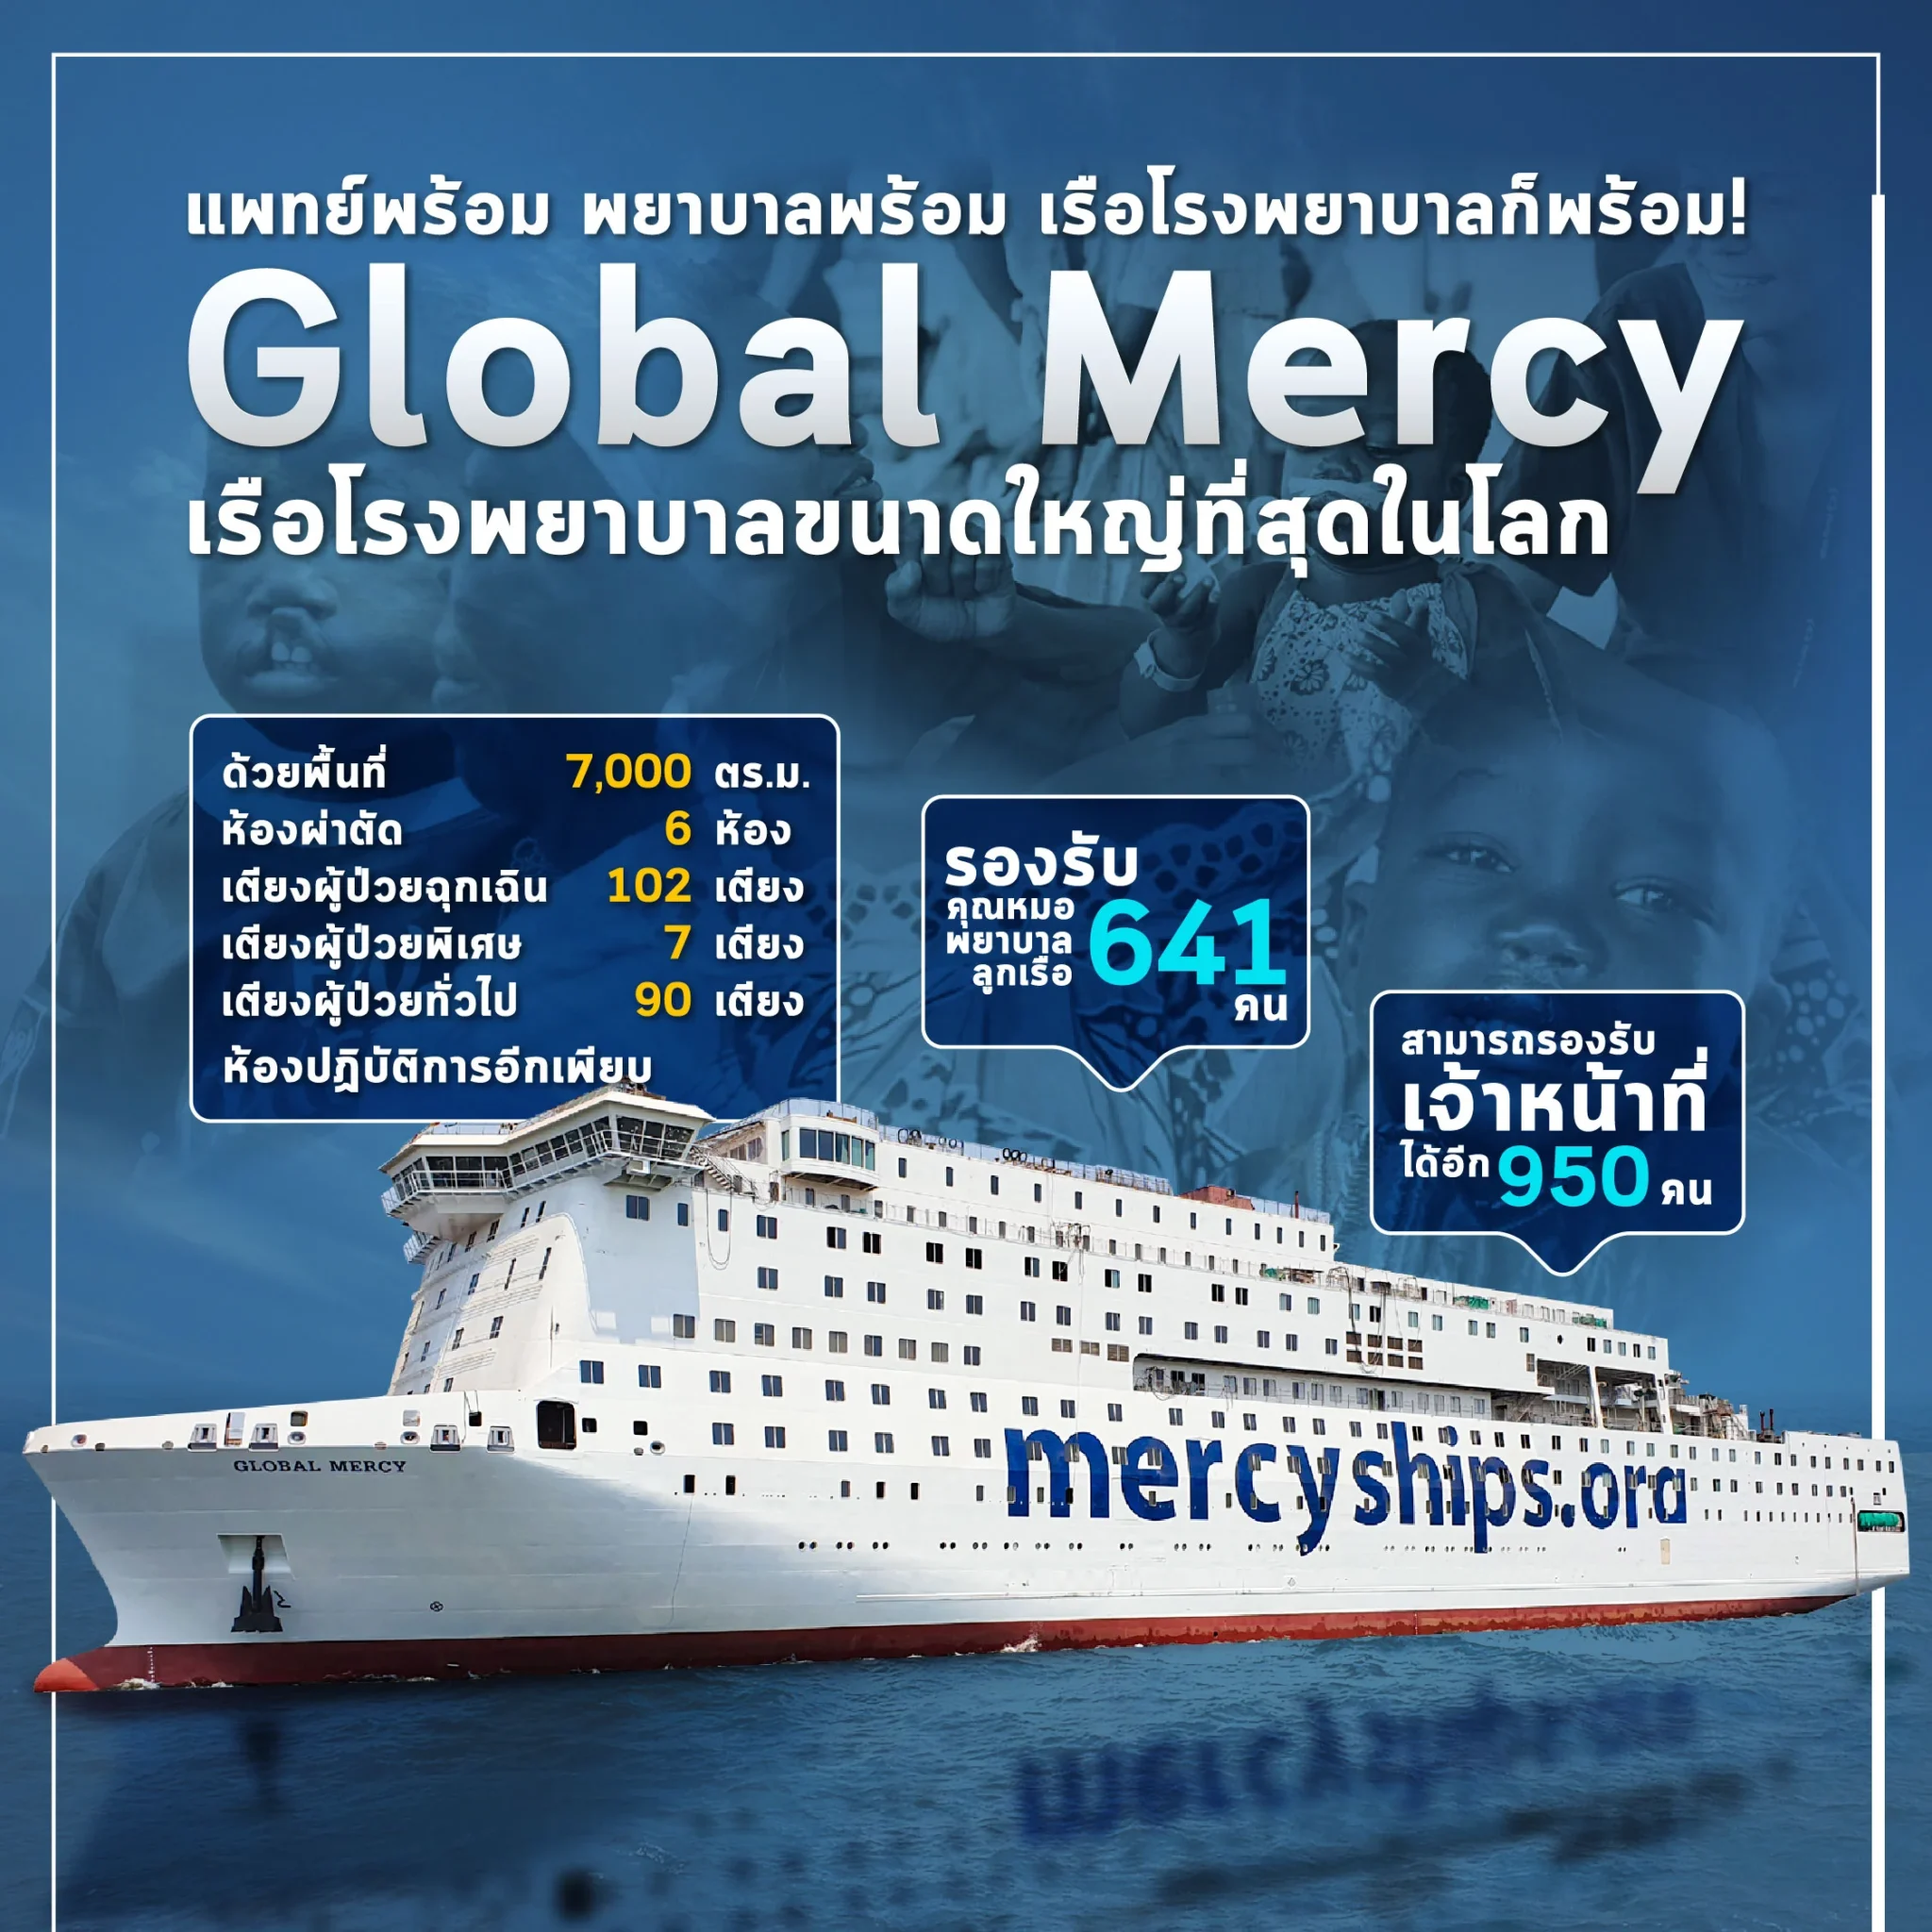 Global Mercy เรือโรงพยาบาลขนาดใหญ่ที่สุดในโลก